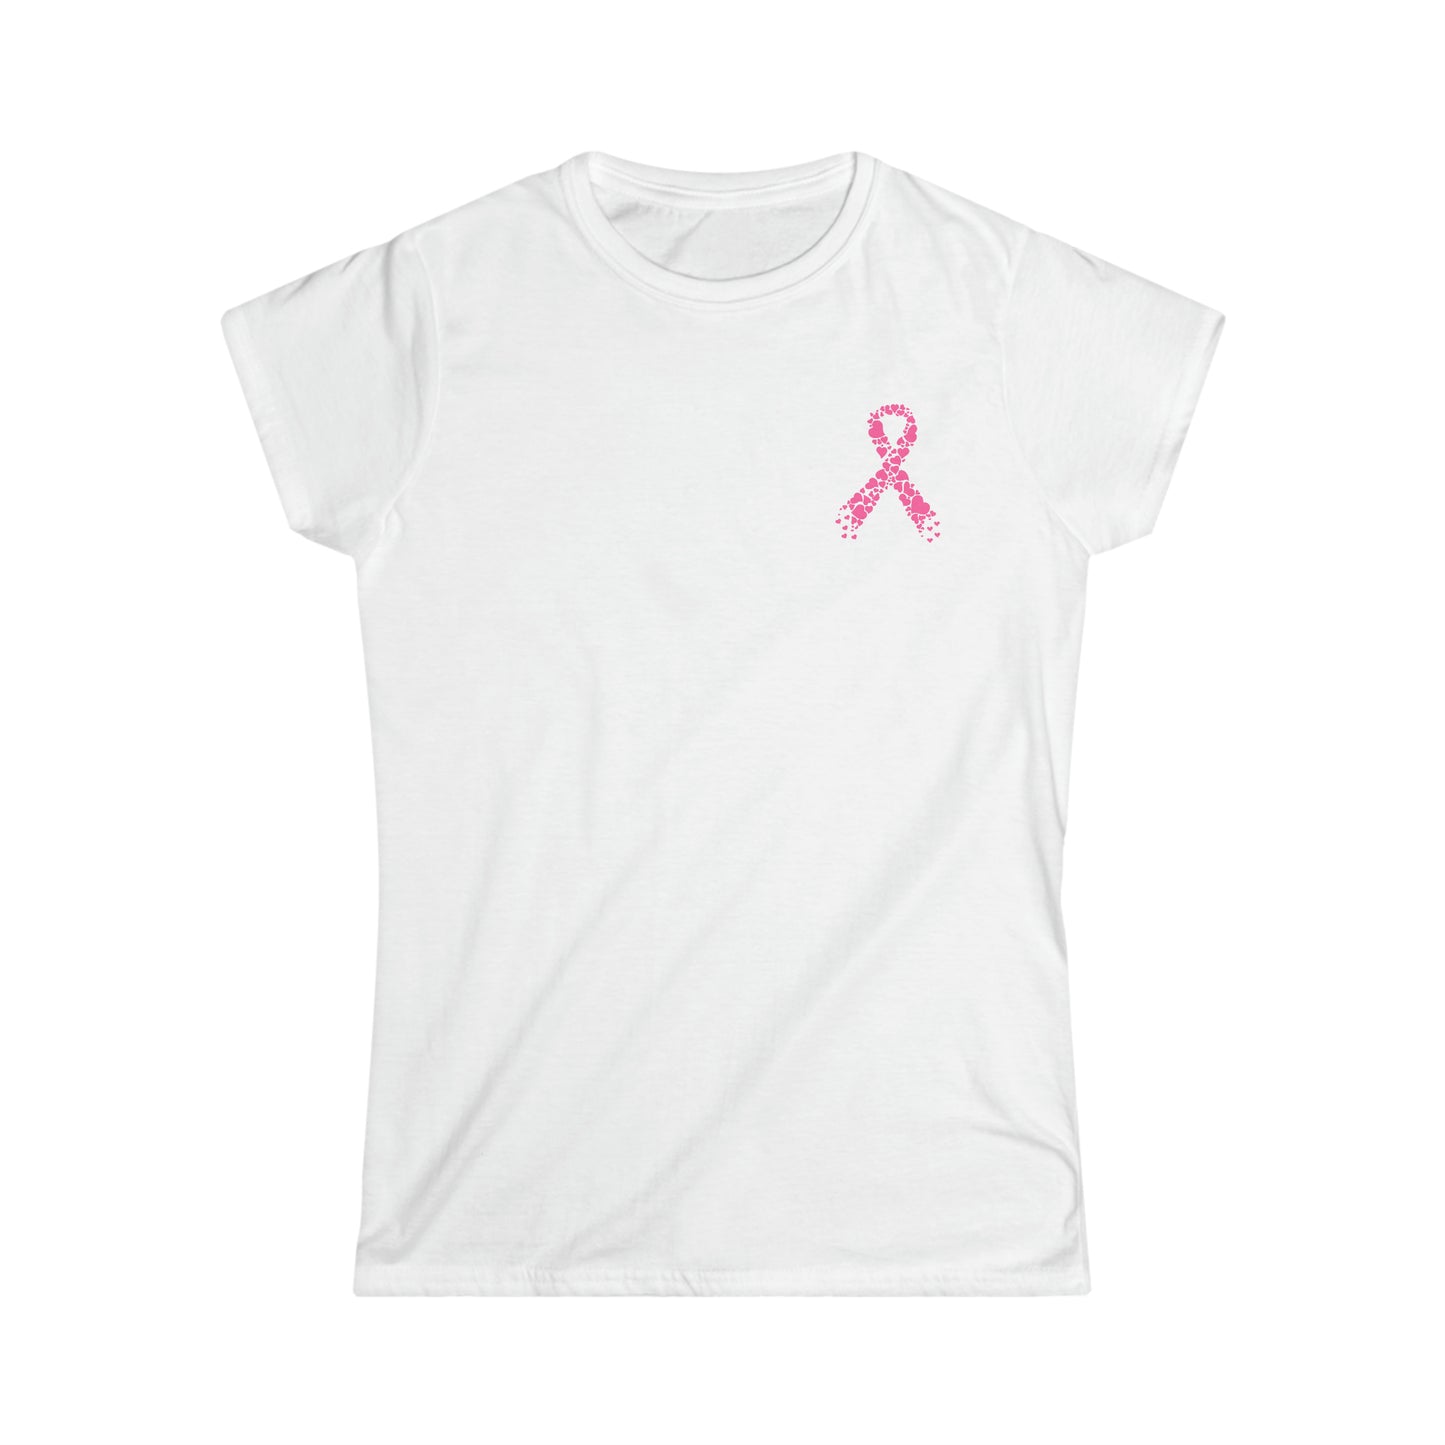 Breast Cancer Awareness Ribbon Women's Tee